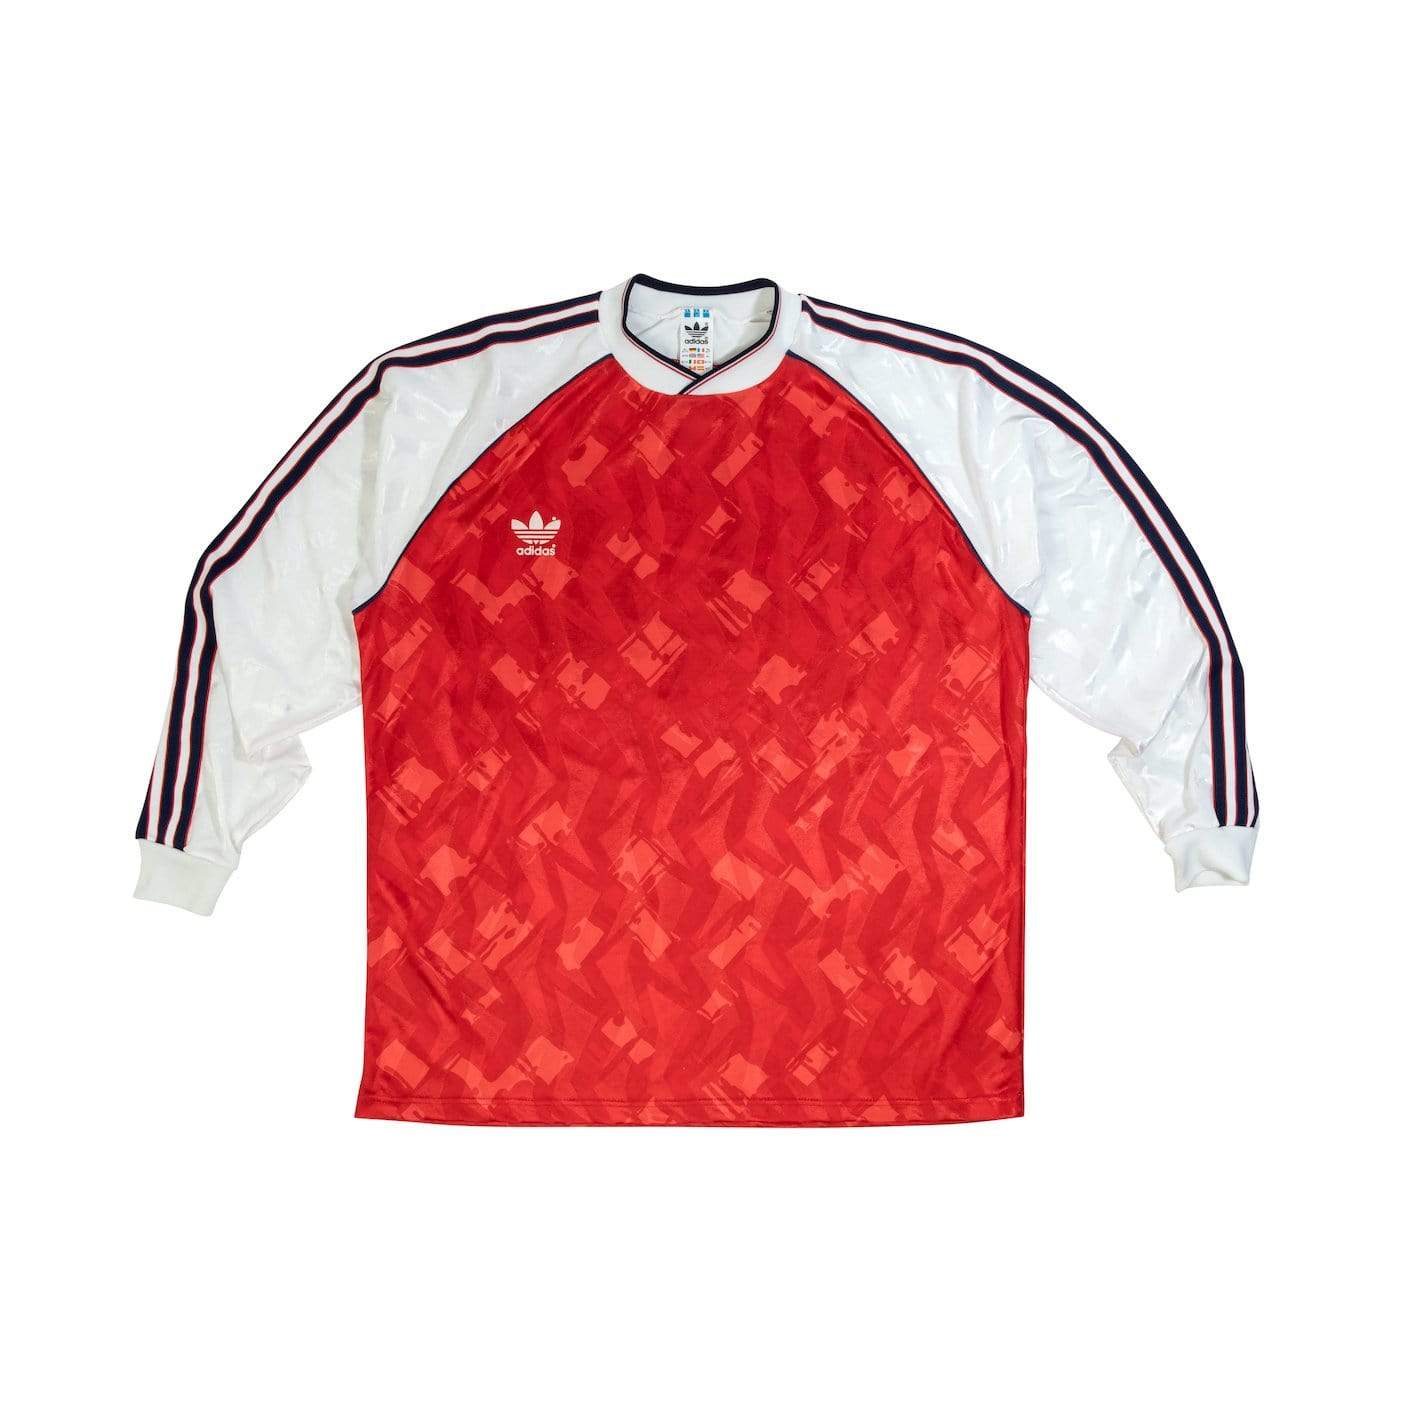 Football Shirt Collective 1992 adidas Yugoslavia Pattern Home Shirt (XXL)